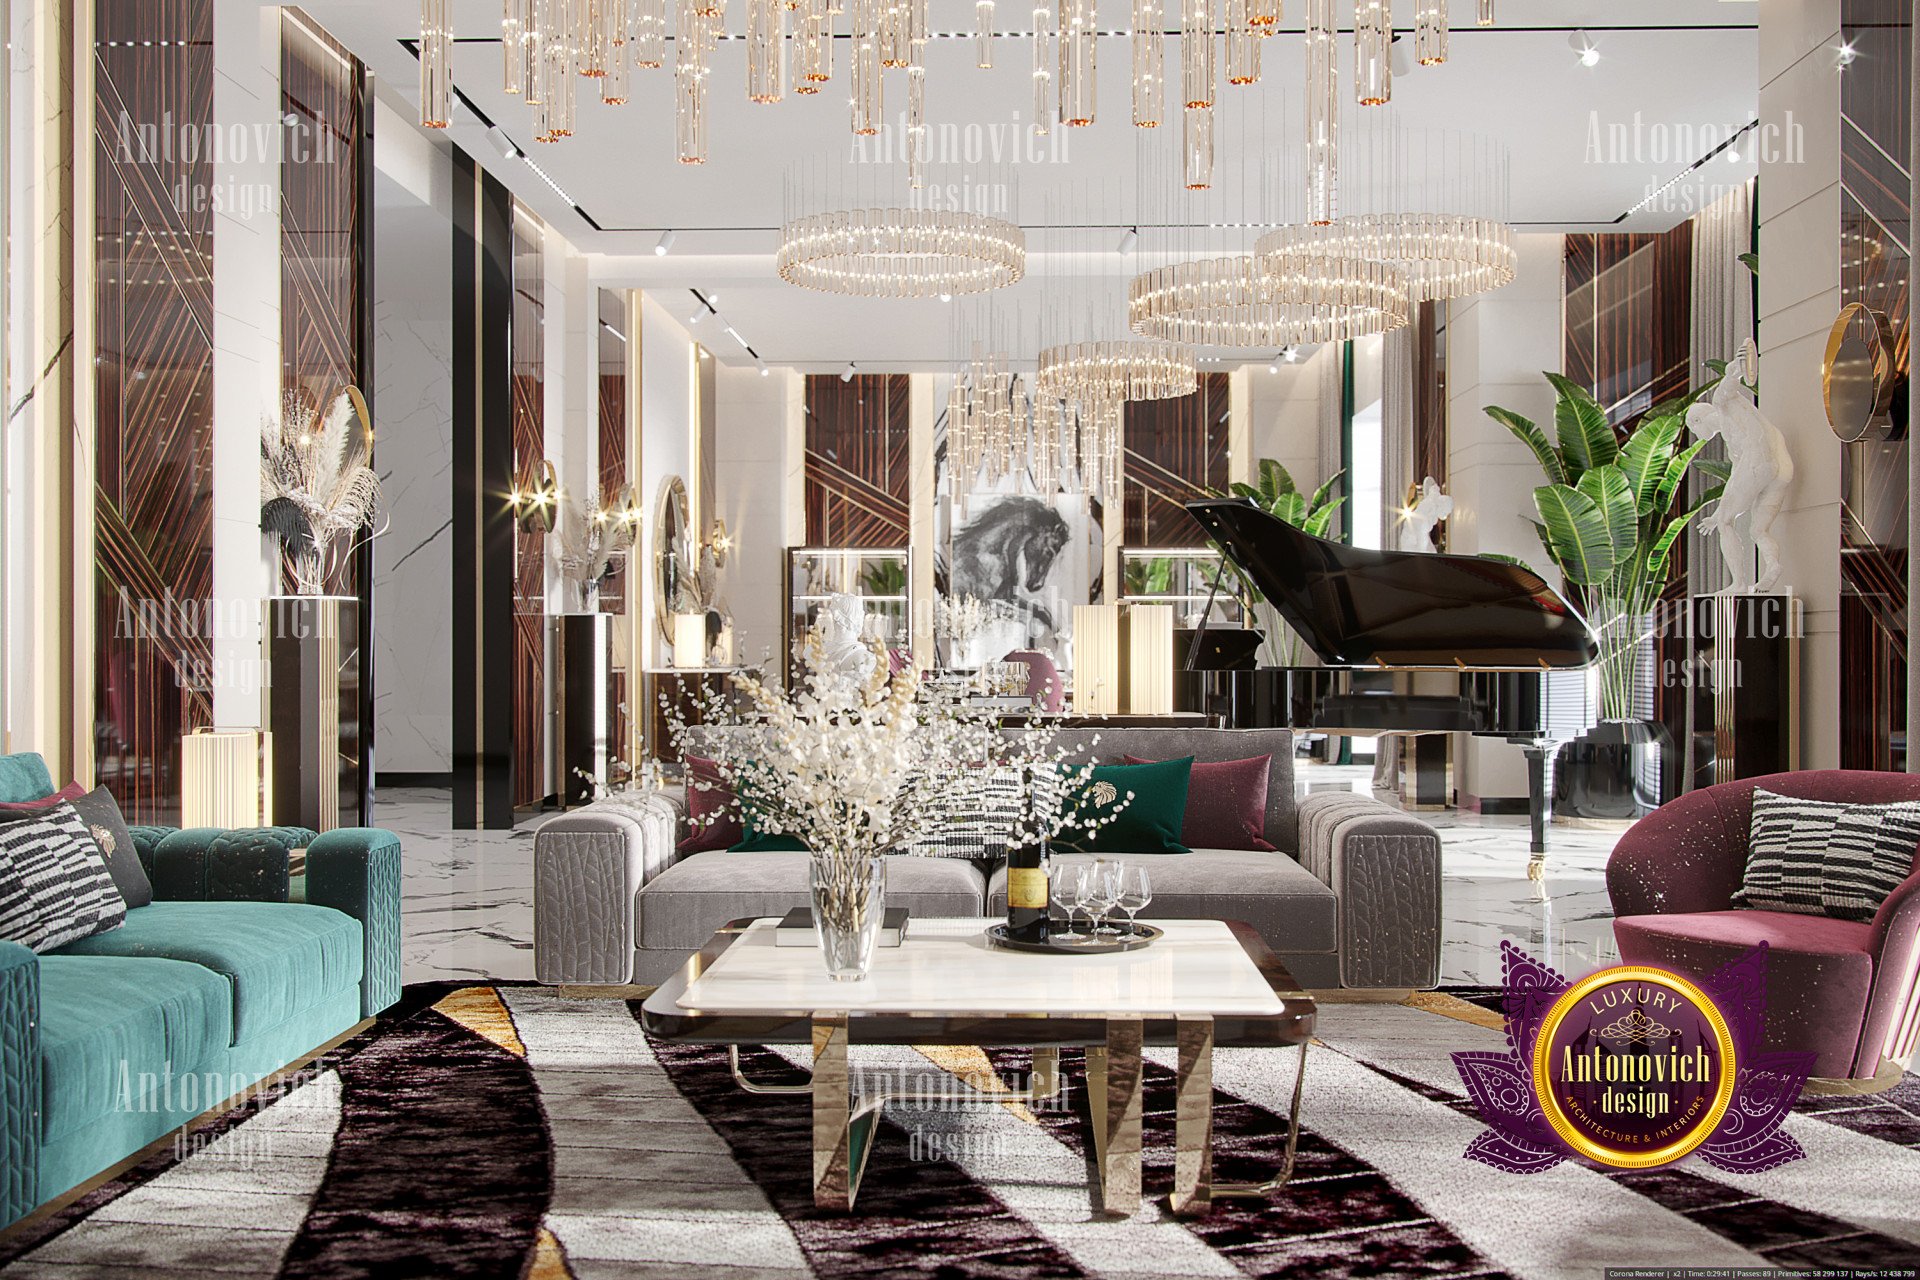 Sophisticated Interior Design - luxury interior design company in ...